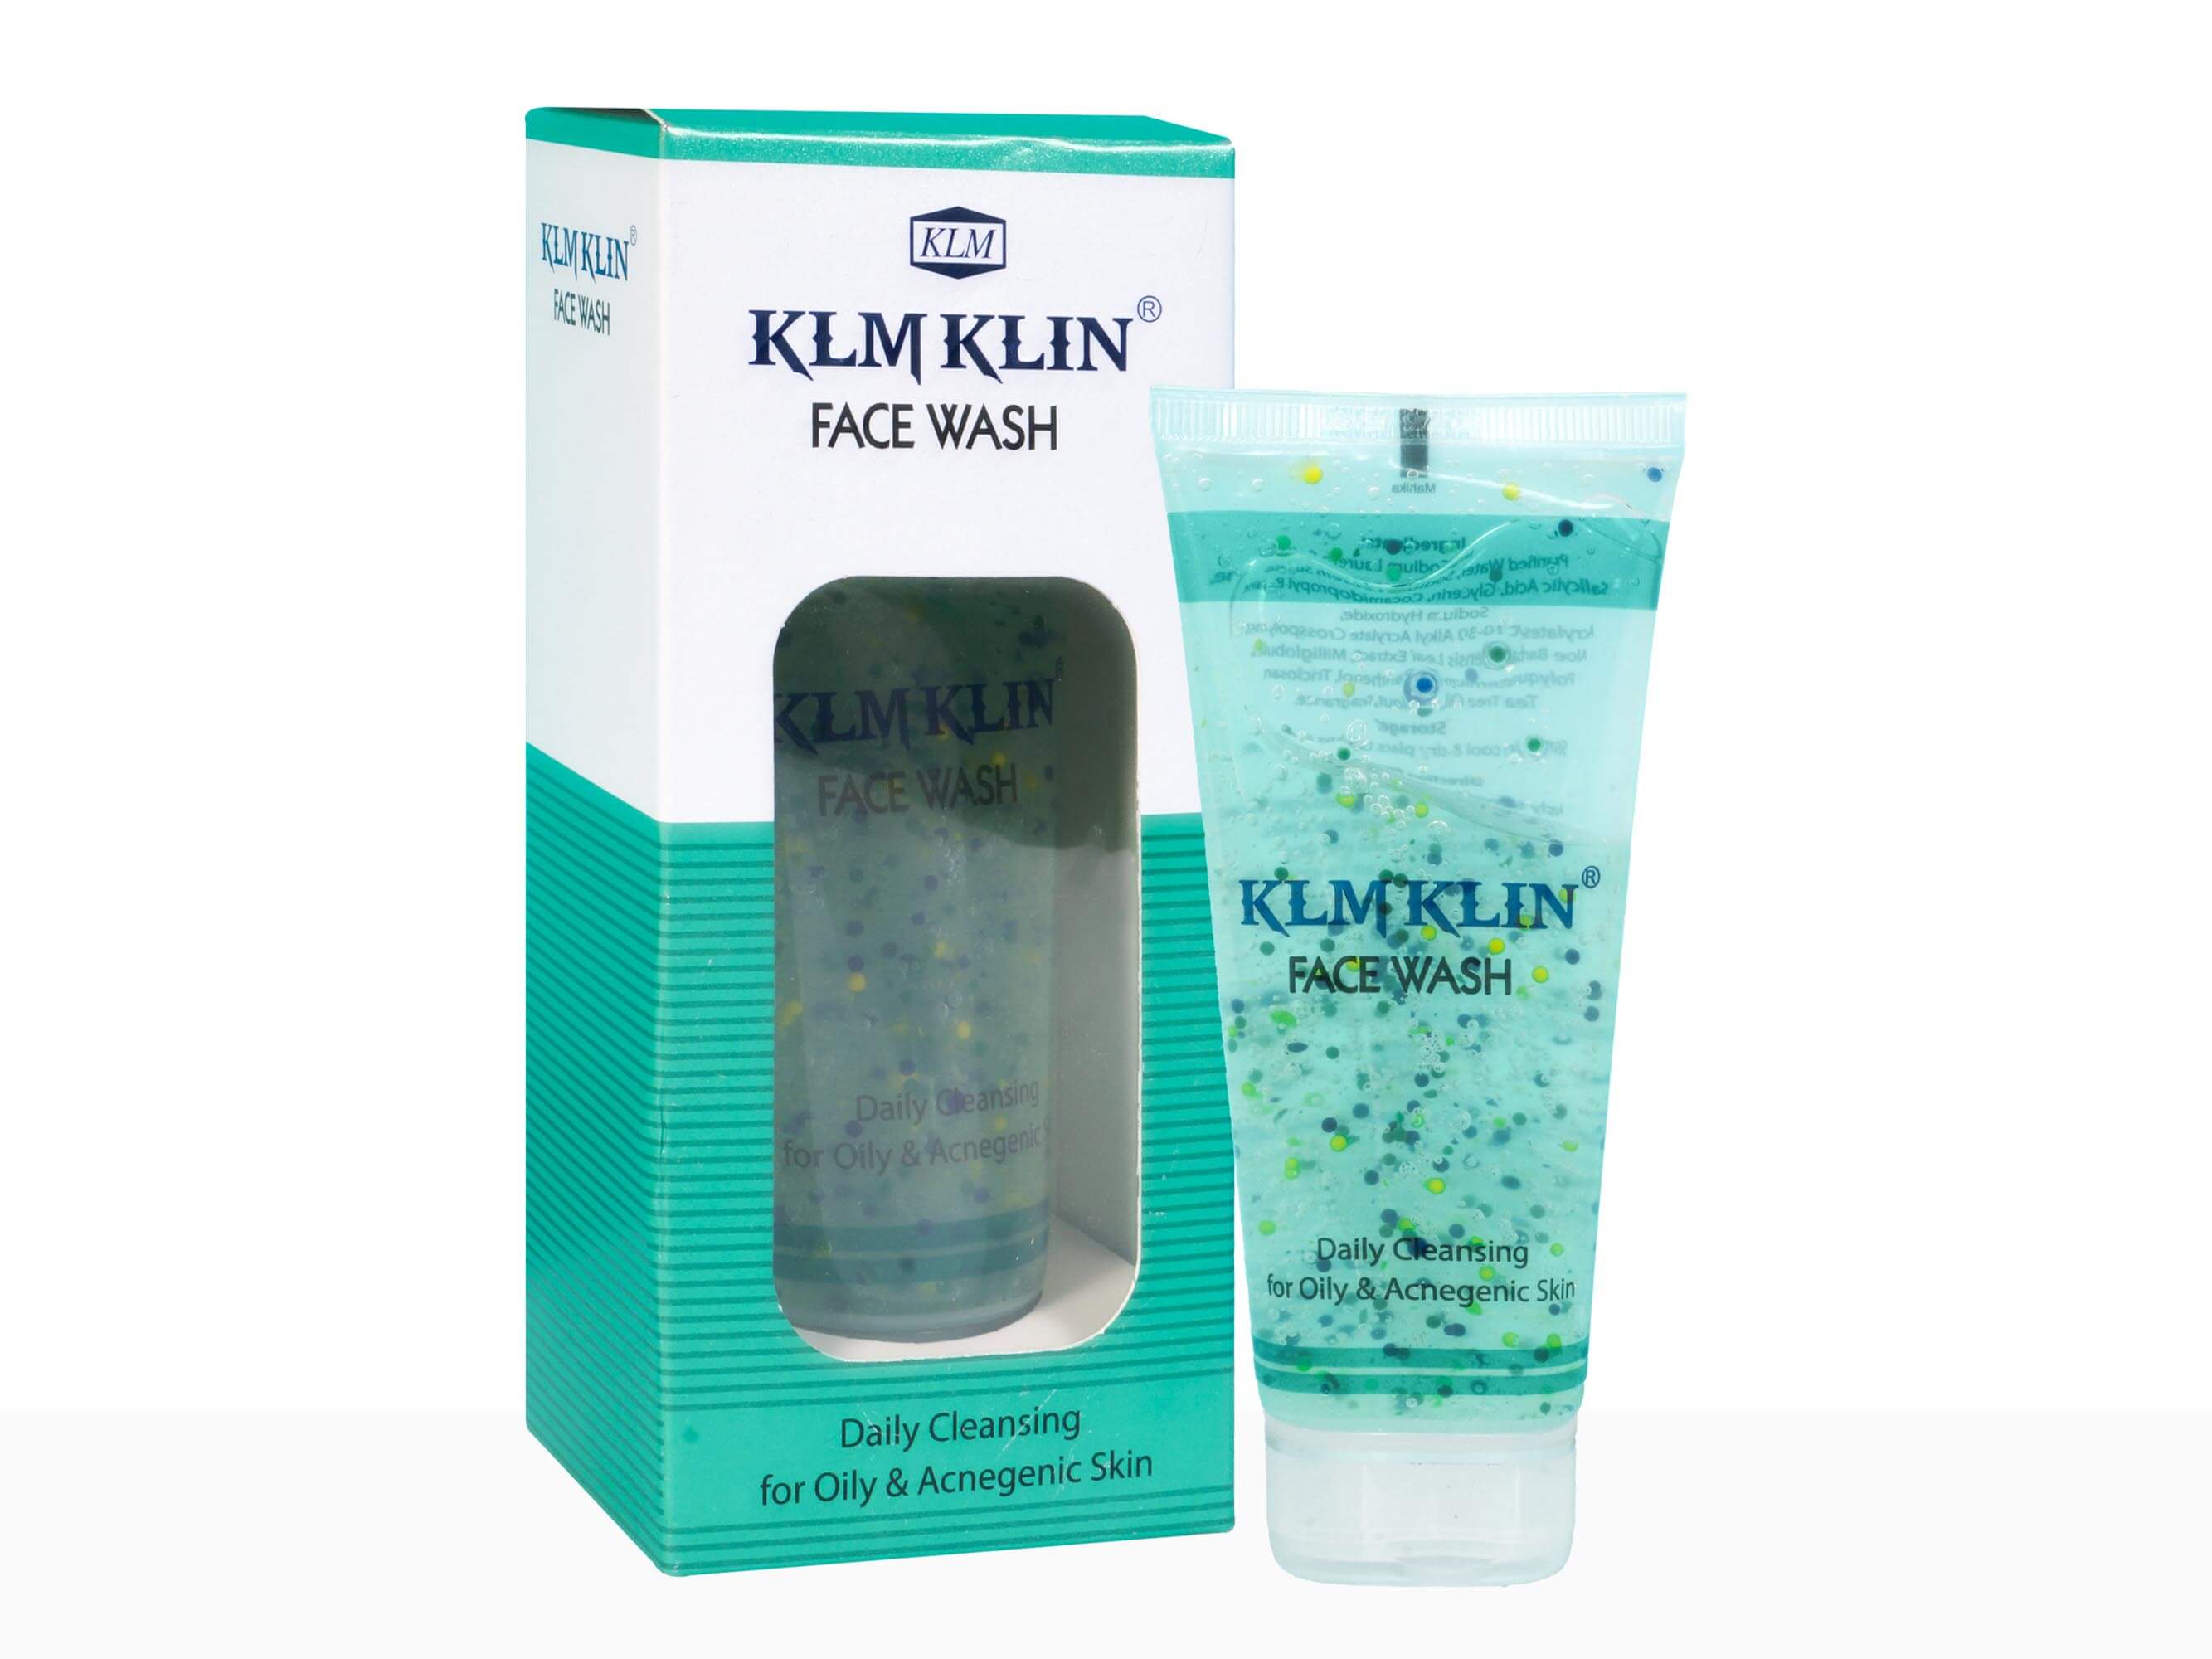 klm klin face wash review